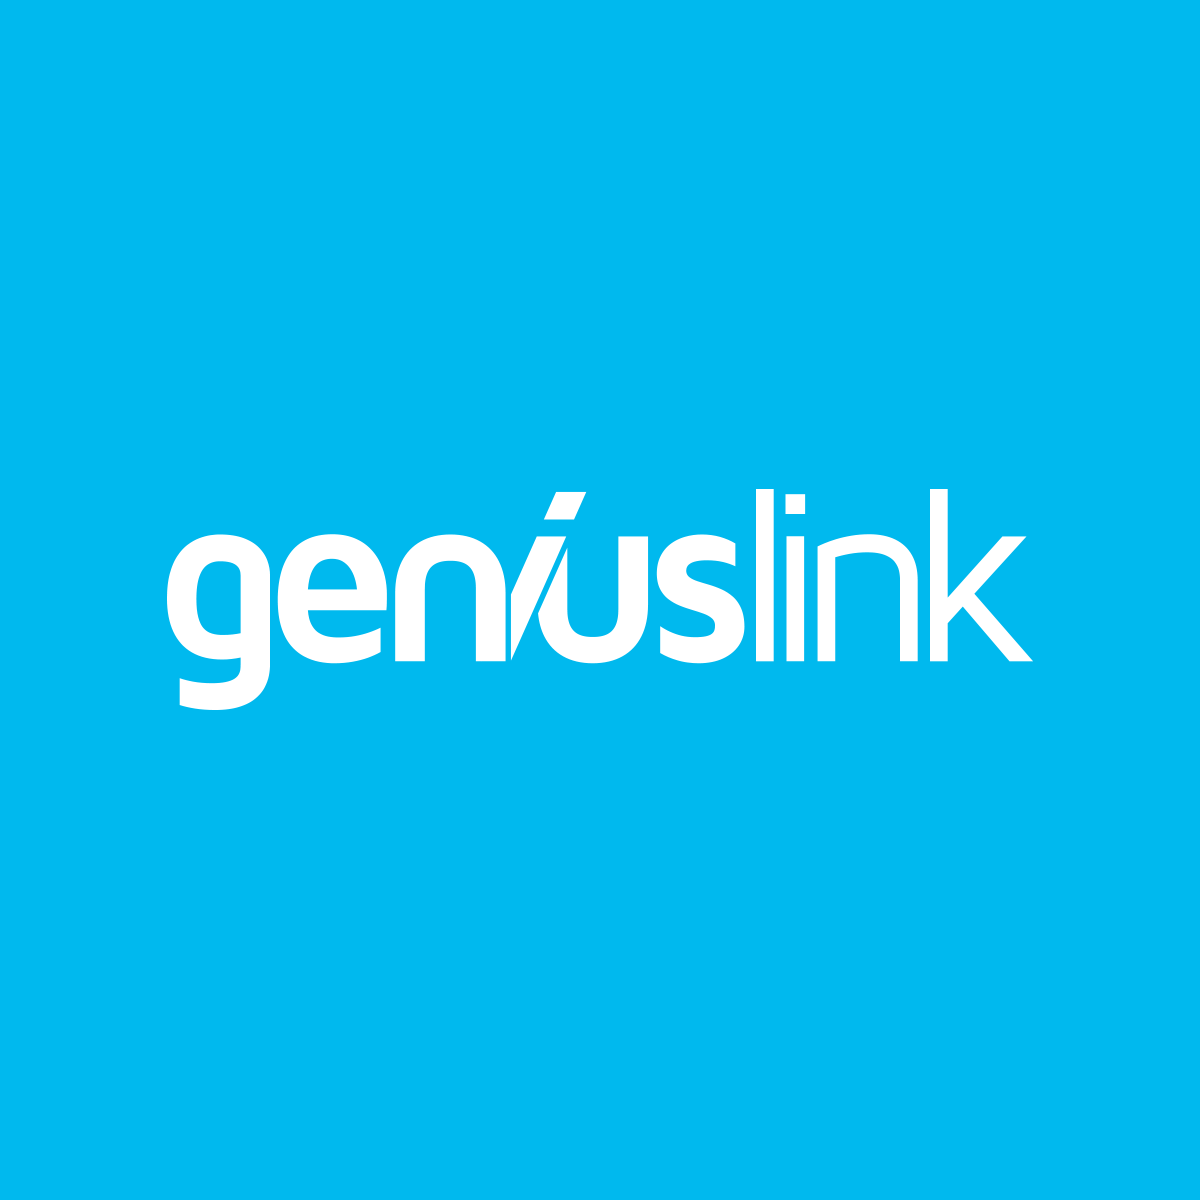 (c) Geniuslink.com